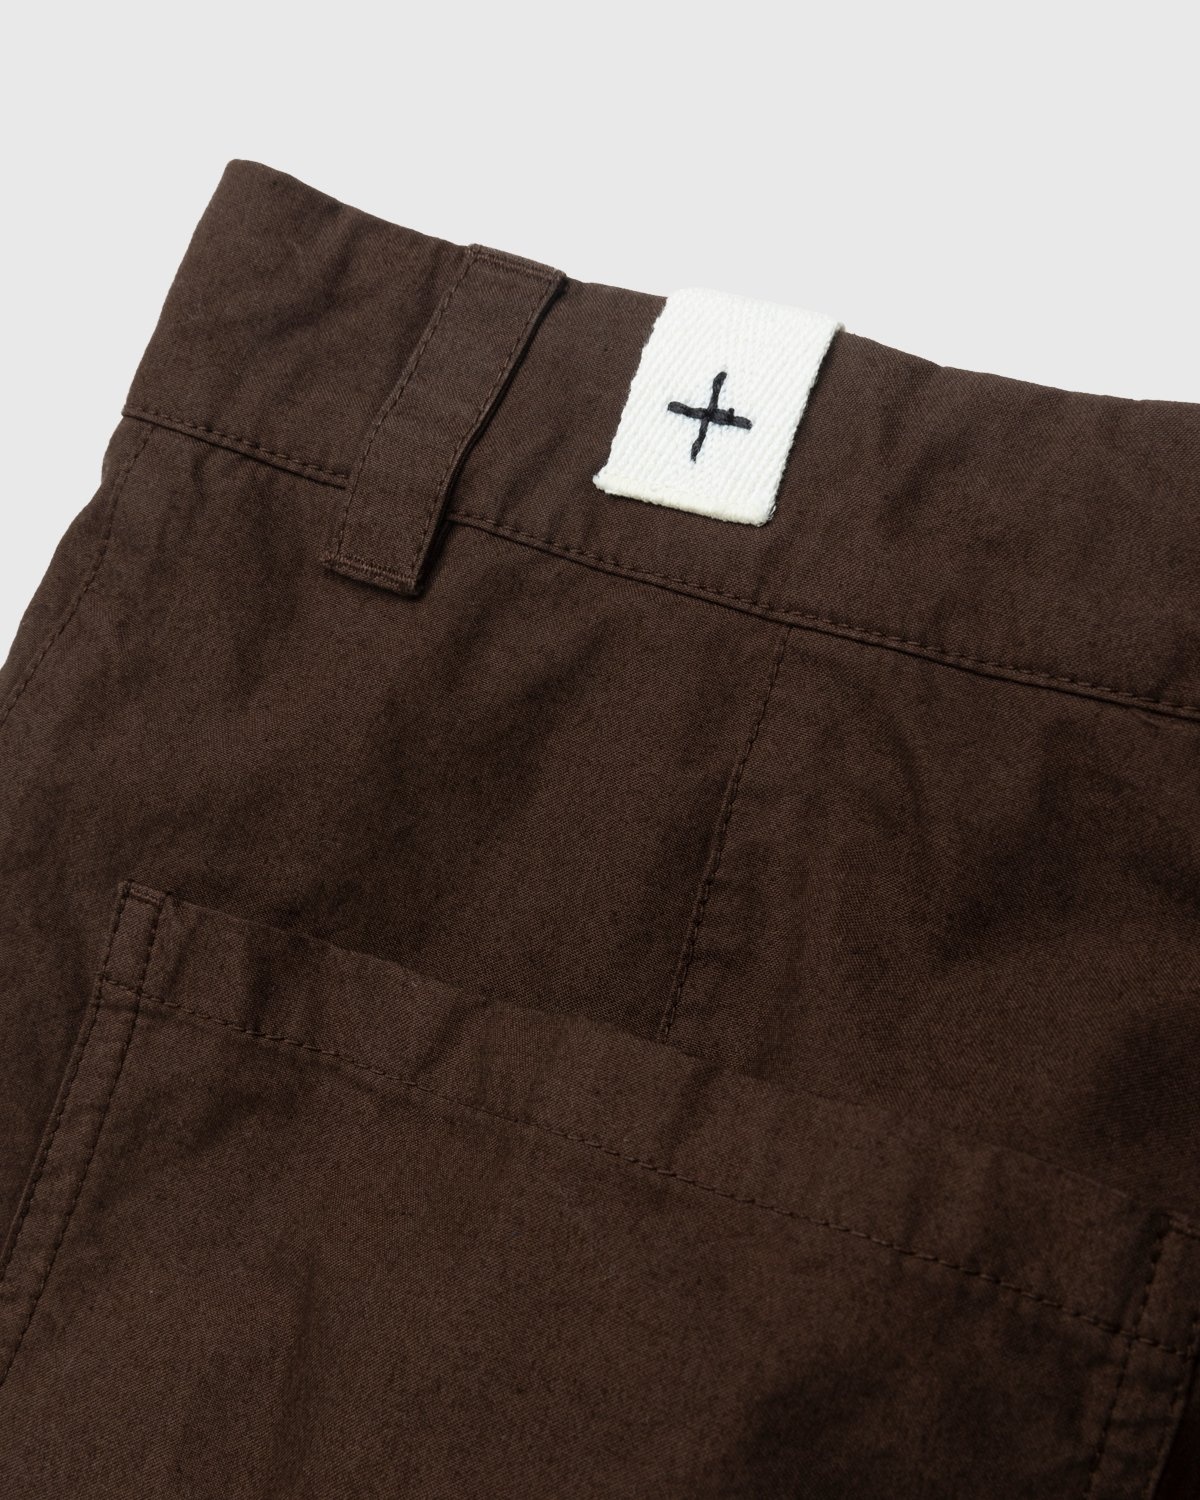 Jil Sander – Cotton Trousers Dark Brown - Trousers - Brown - Image 5